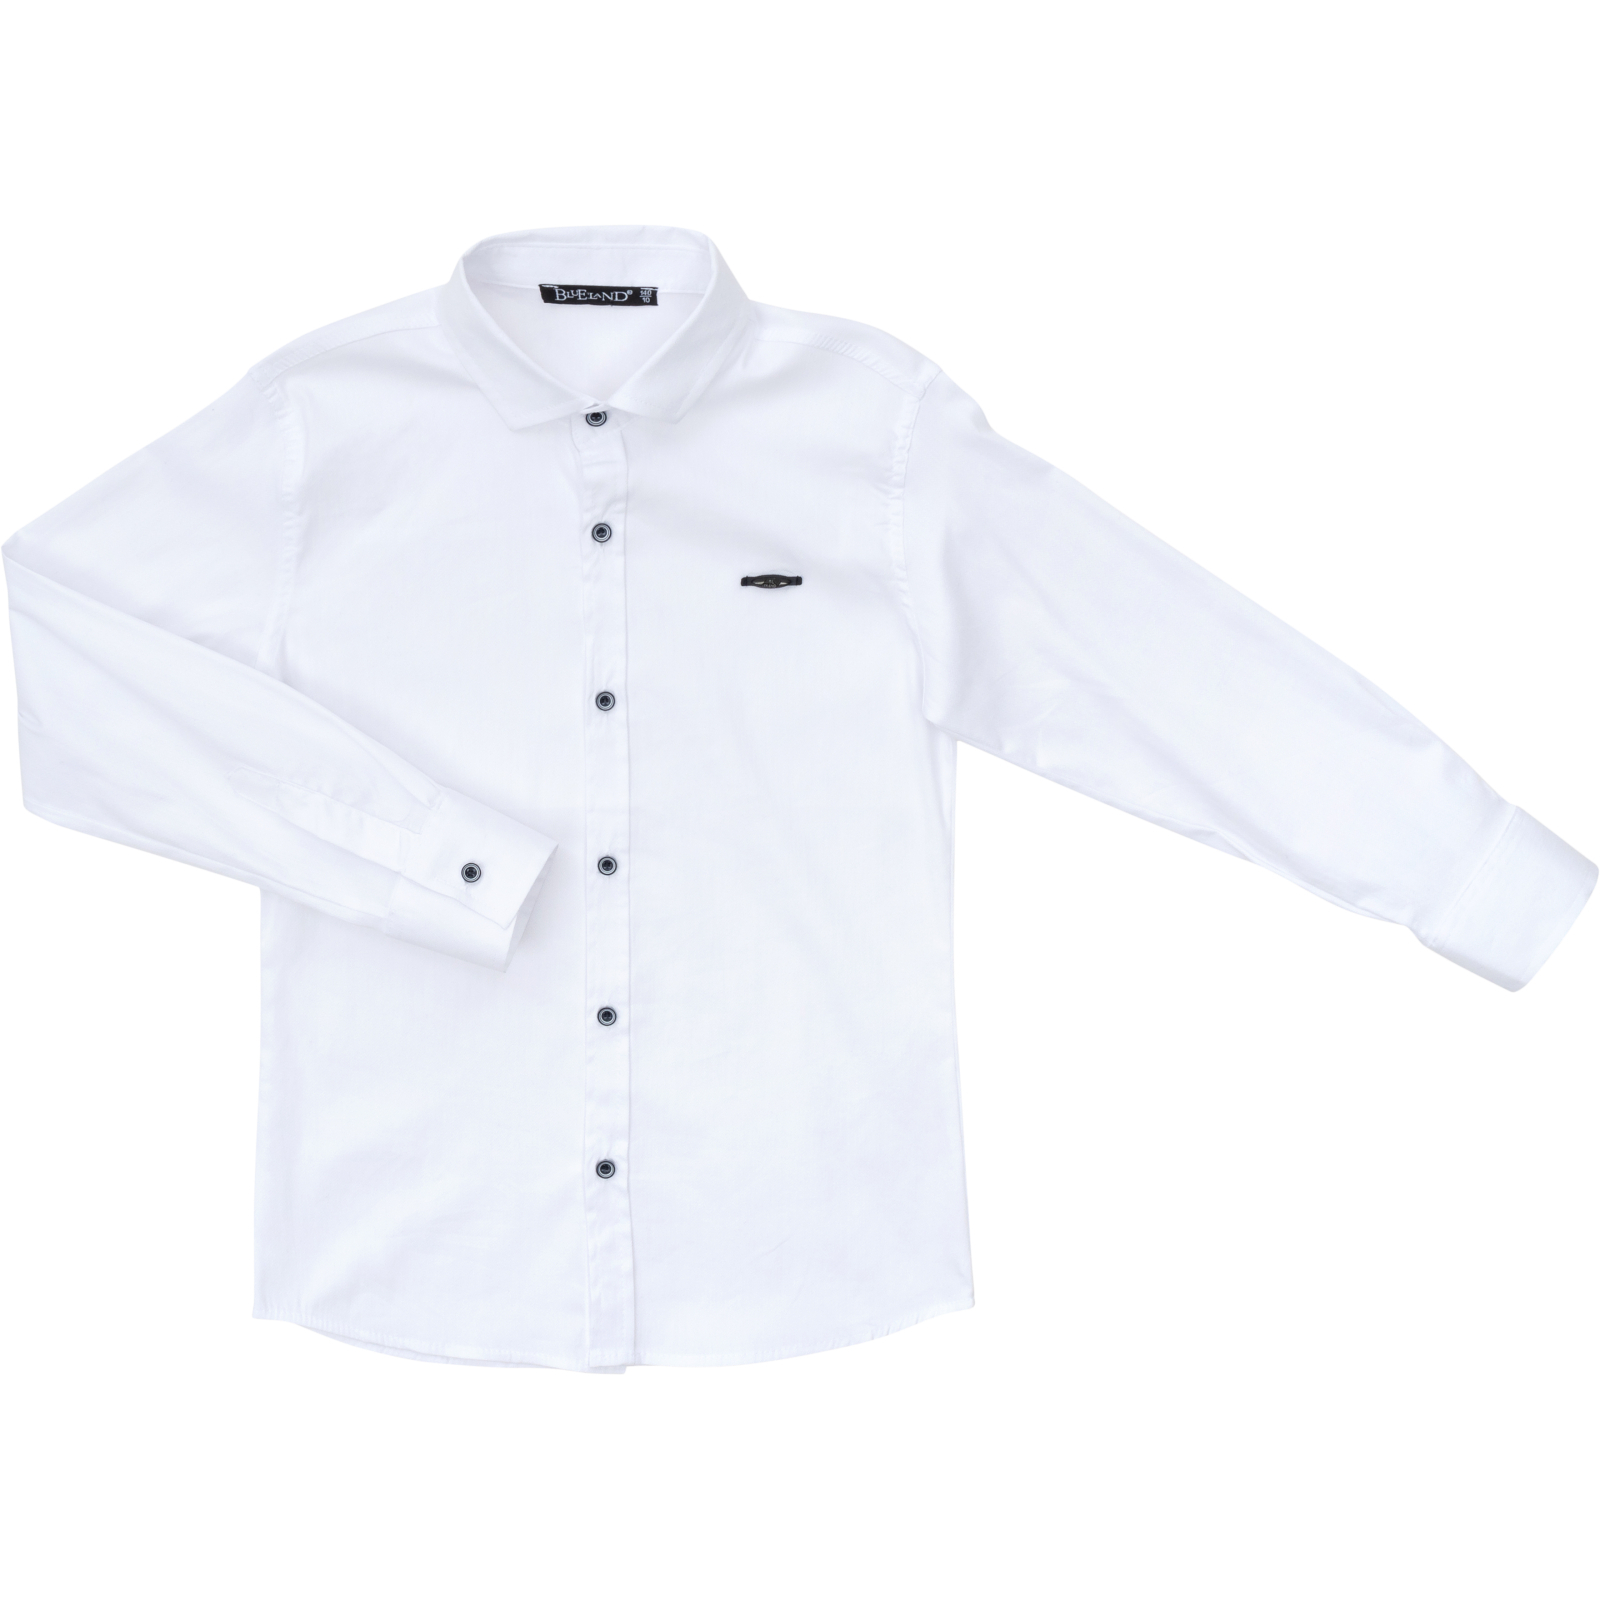 Рубашка Blueland с длинным рукавом (10680-140B-white)